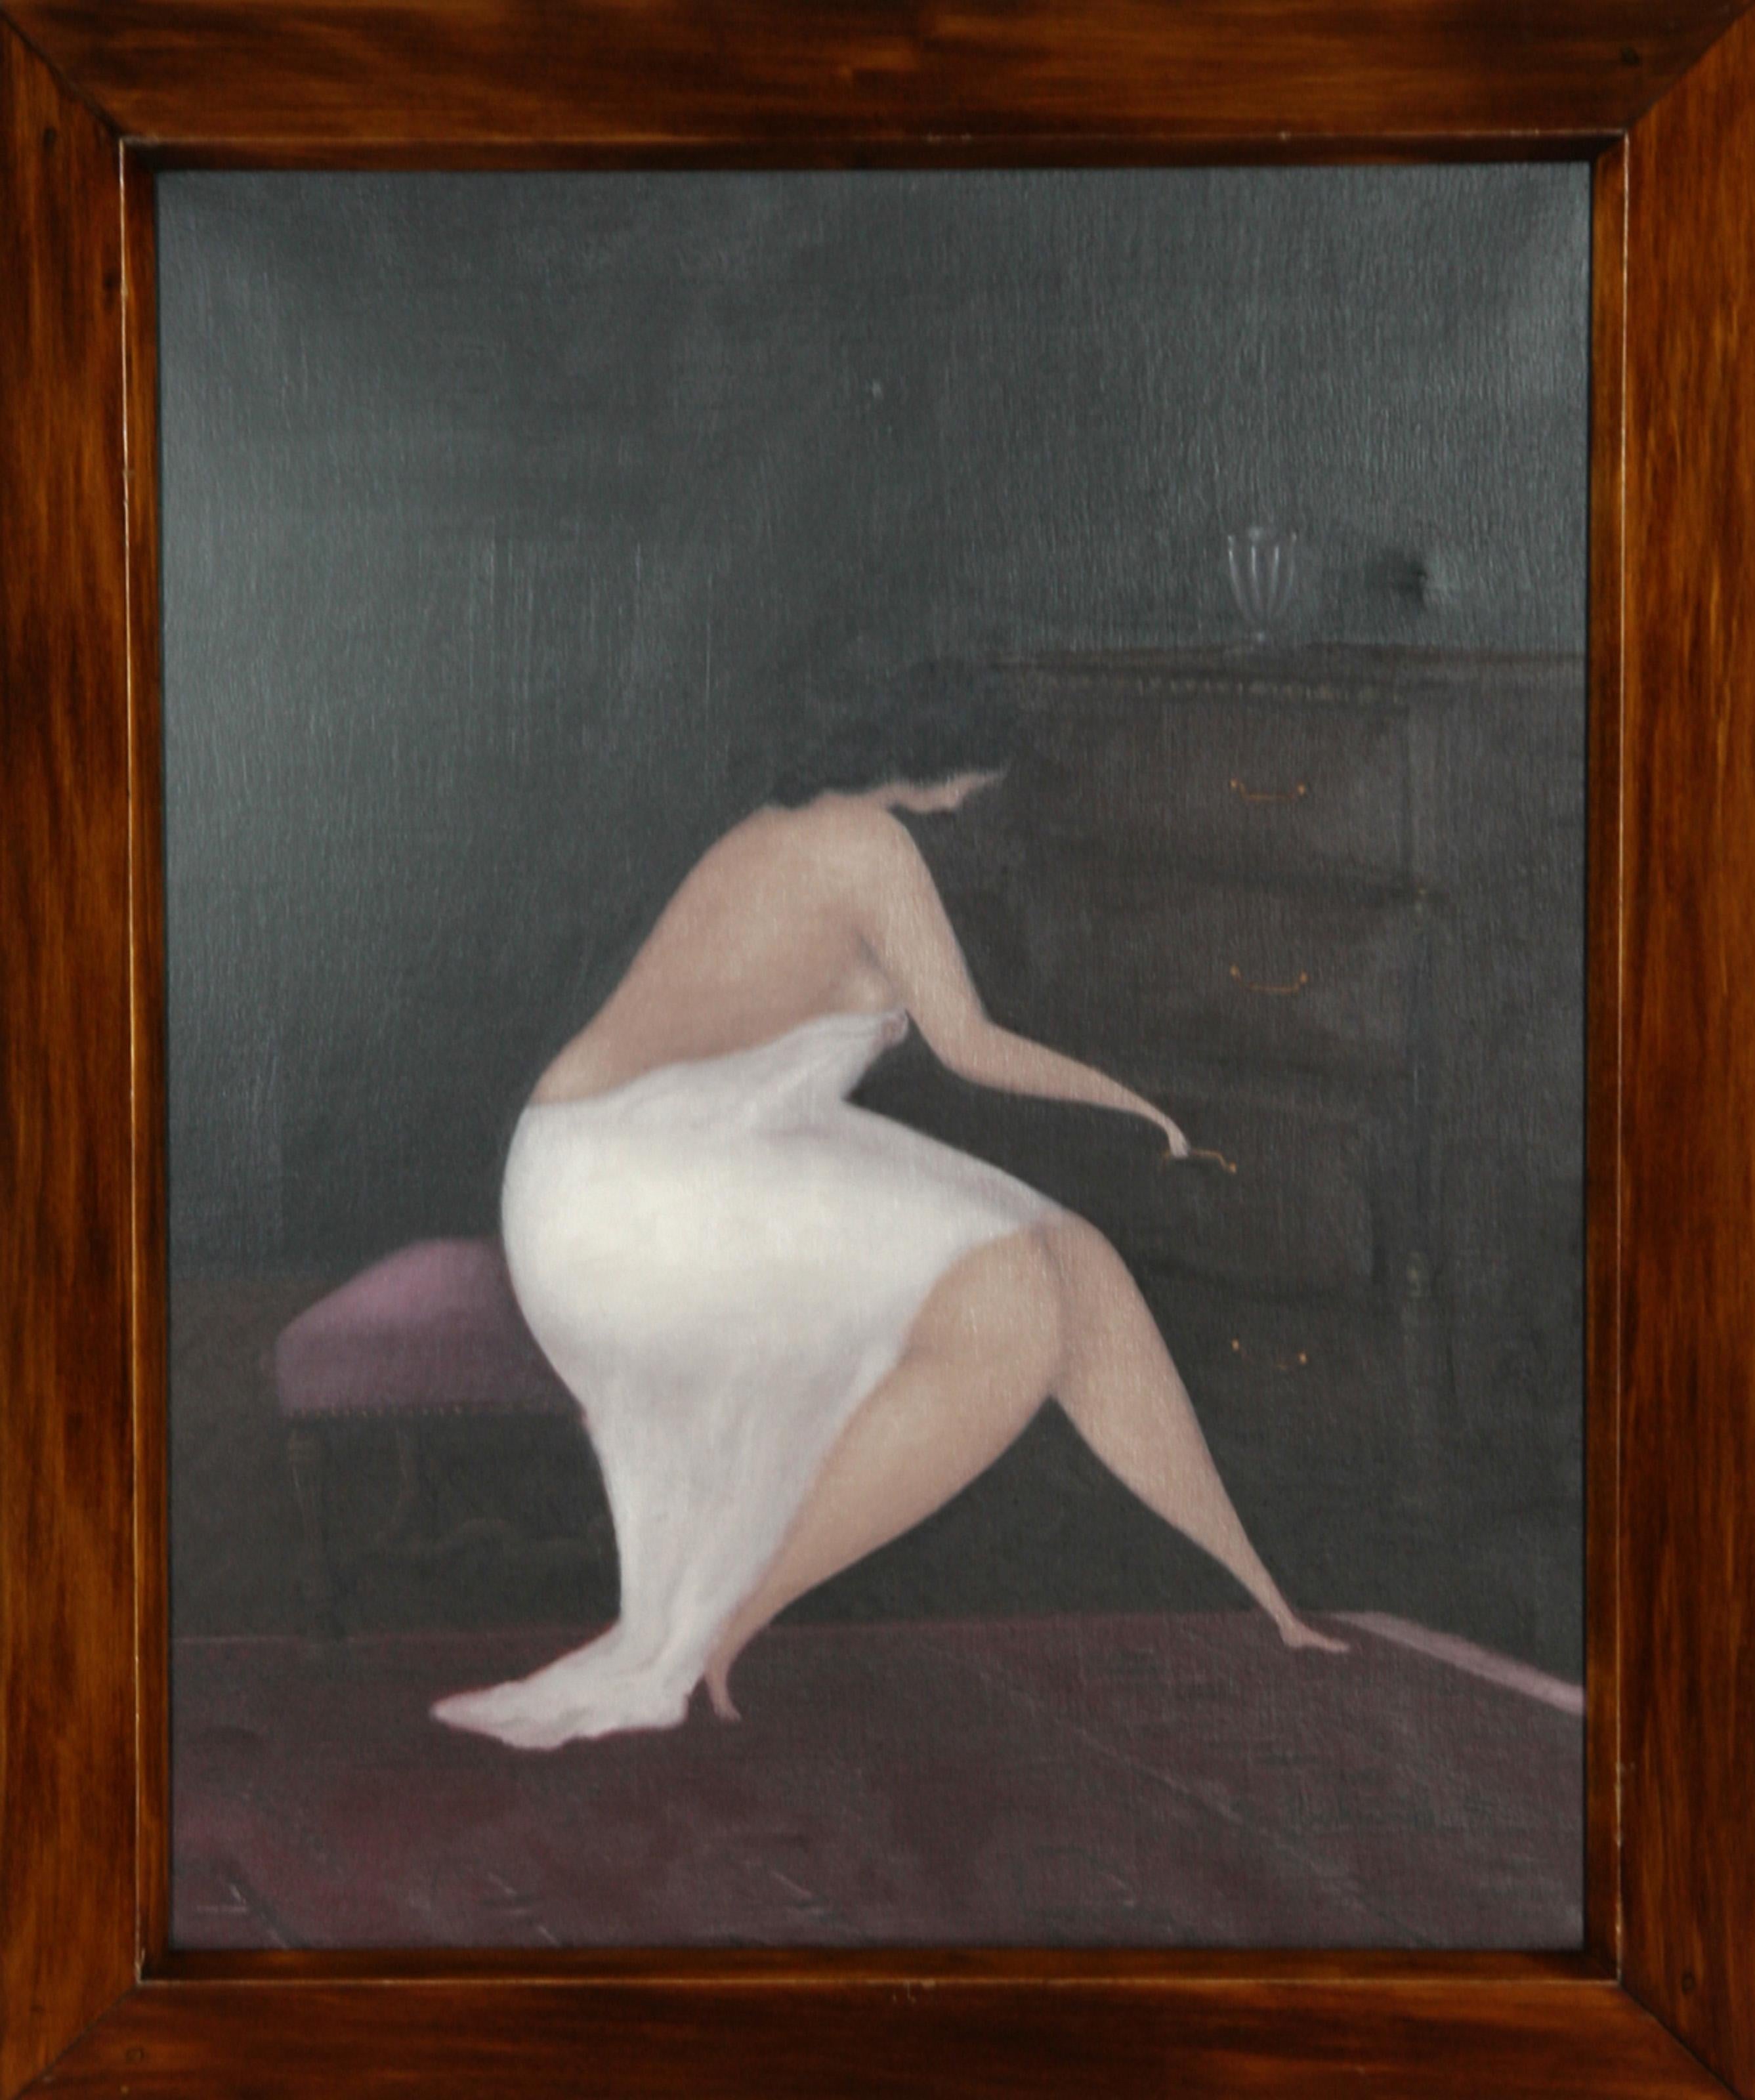 Branko Bahunek, Croatian (1935 - ) -  Woman with Bureau. Year: 1991, Medium: Oil on Canvas, Size: 21 in. x 17 in. (53.34 cm x 43.18 cm), Frame Size: 25 x 21.5 inches 